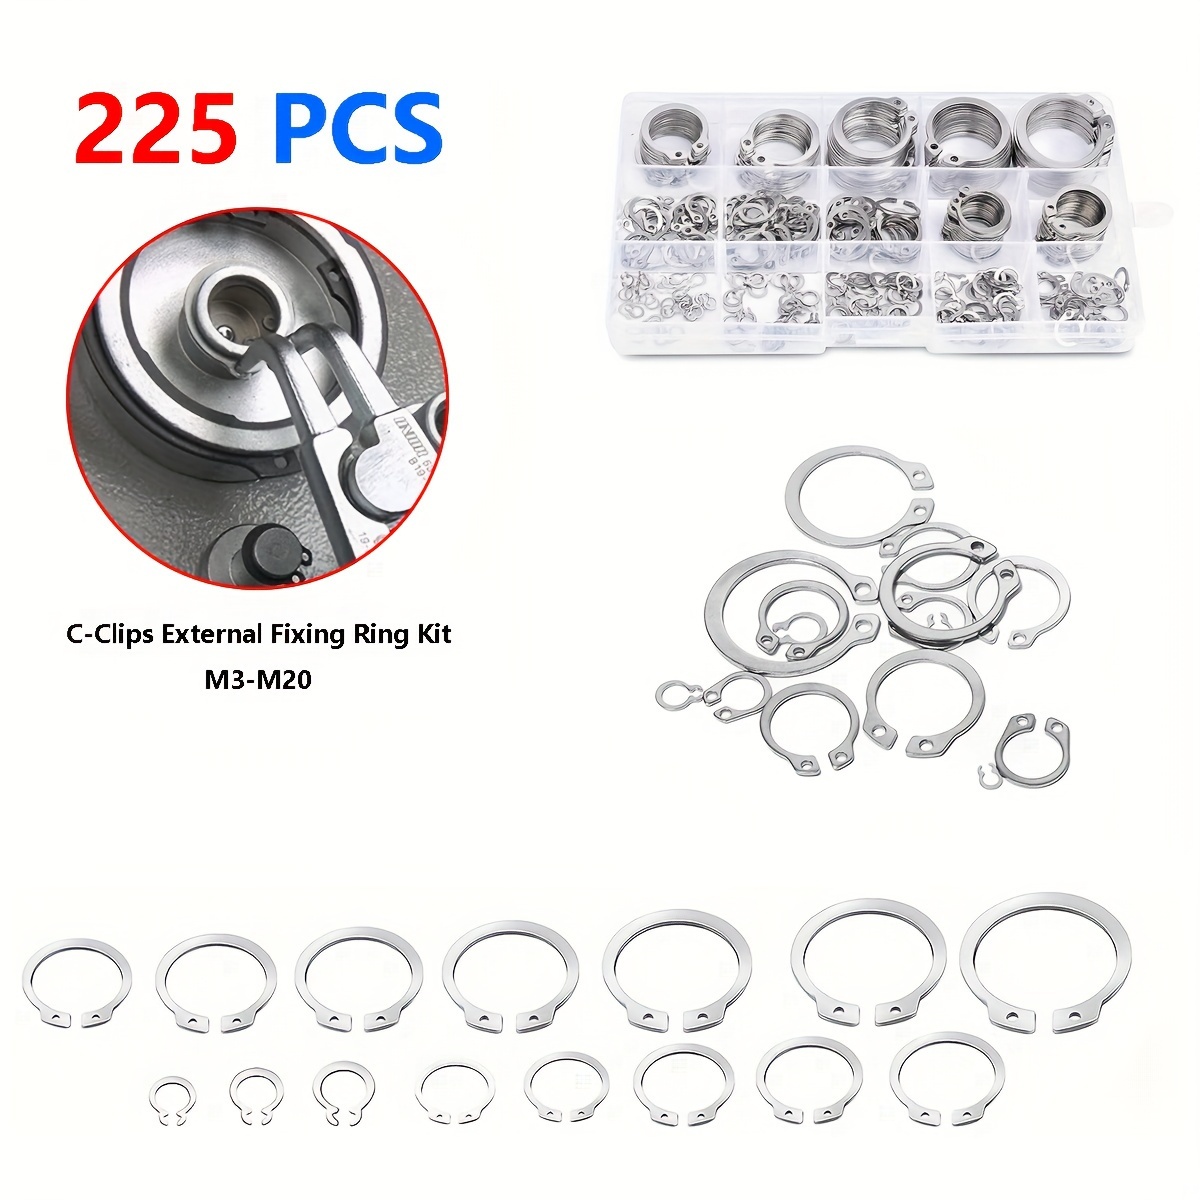 

225pcs C-clips External Fixing Ring Kit 15sizes 304 Stainless Steel Coil Shaft Assortment Kit M3-m20 Pack Set